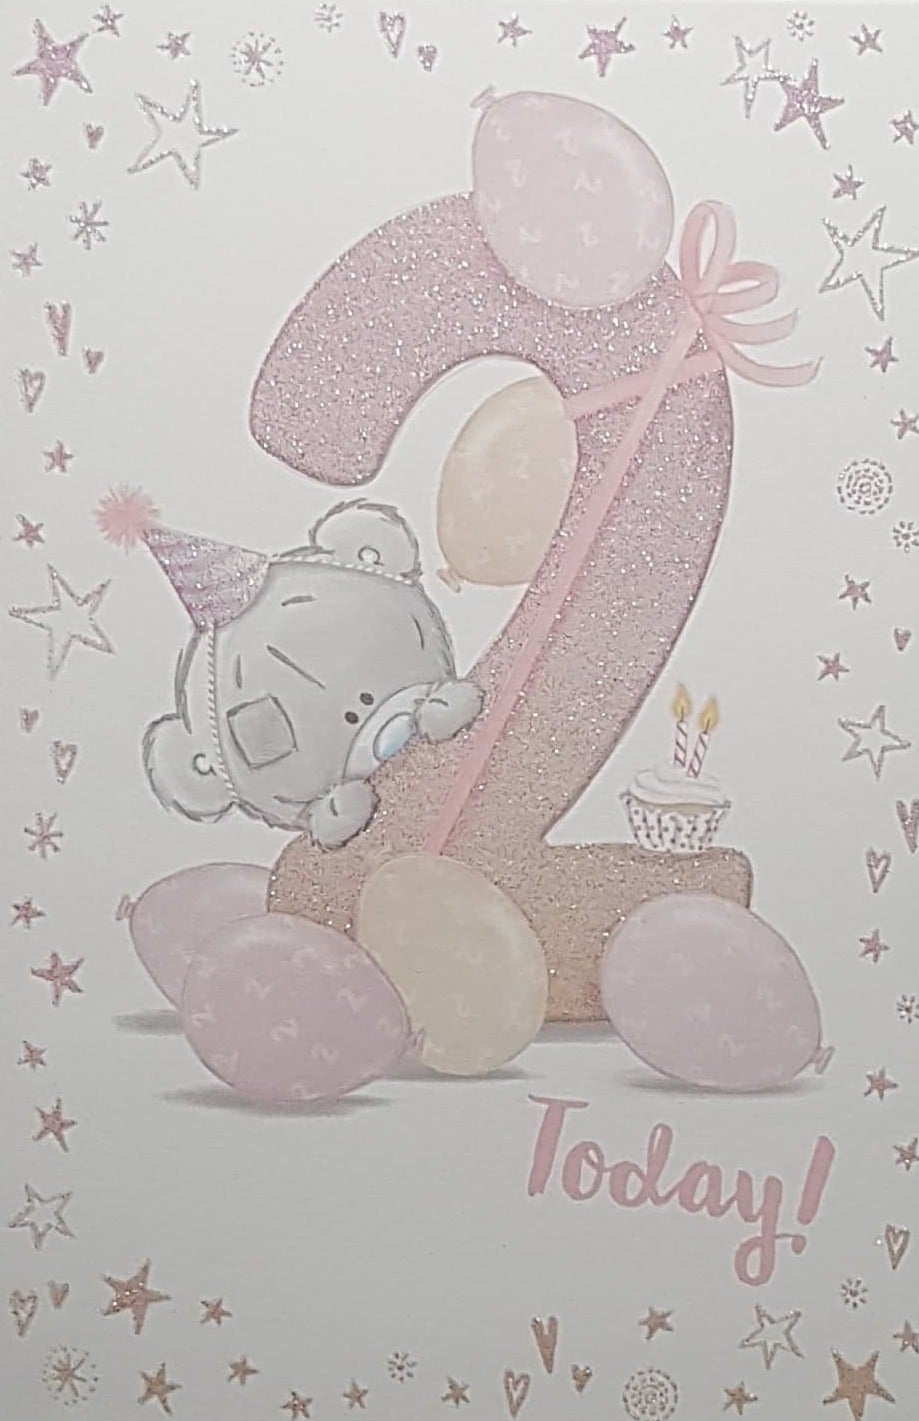 Age 2 Birthday Card - Cute Teddy Hiding Behind No. 2 & Pink Balloons